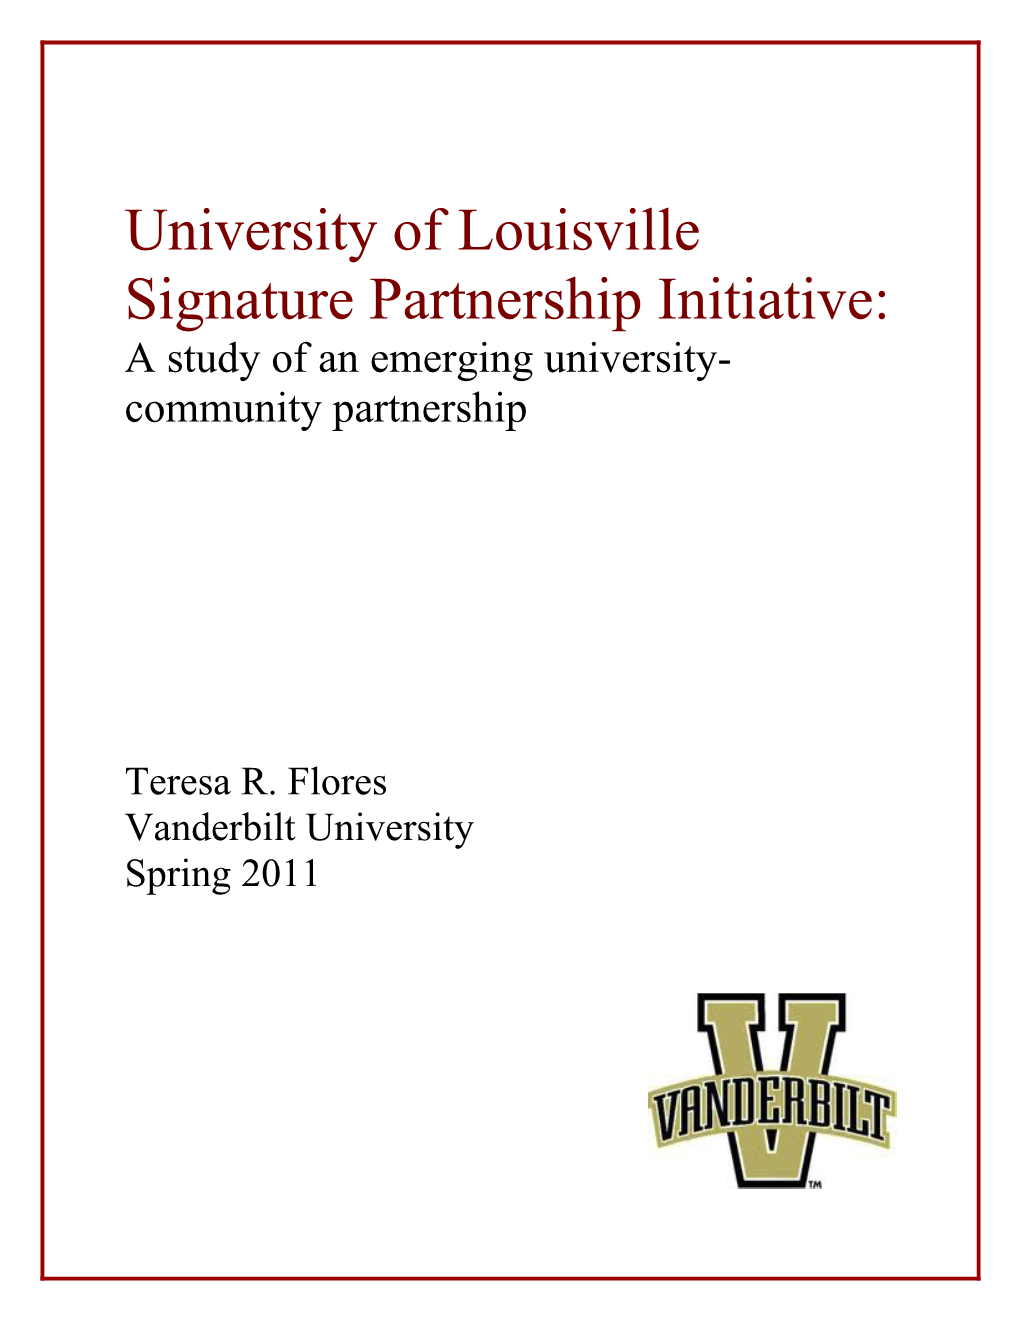 University of Louisville Signature Partnership Initiative